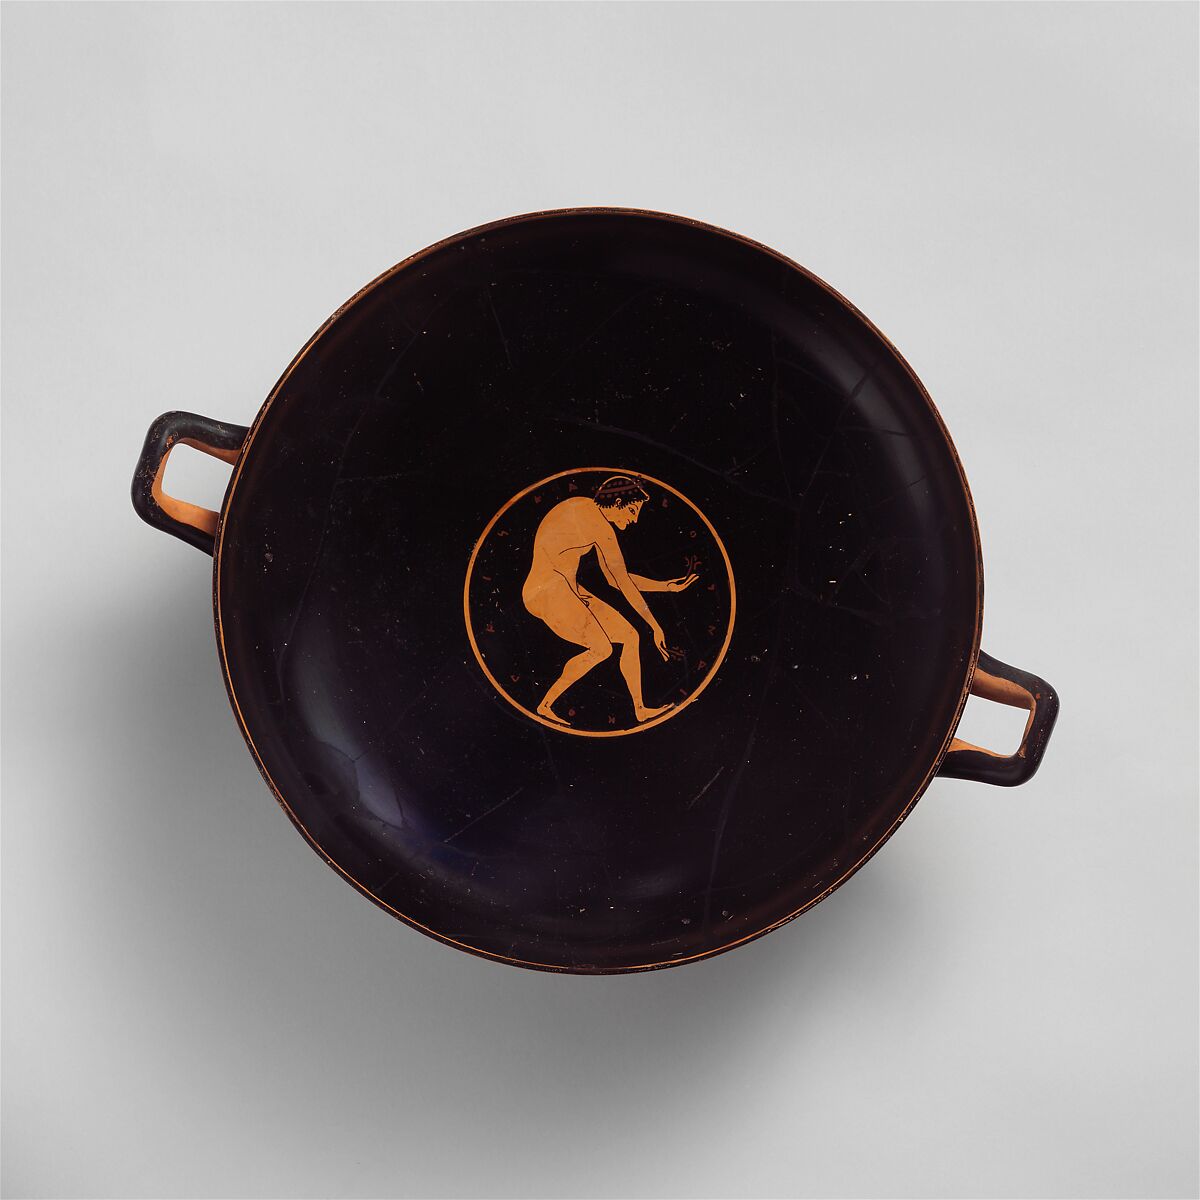 Terracotta kylix (drinking cup), Euergides Painter, Terracotta, Greek, Attic